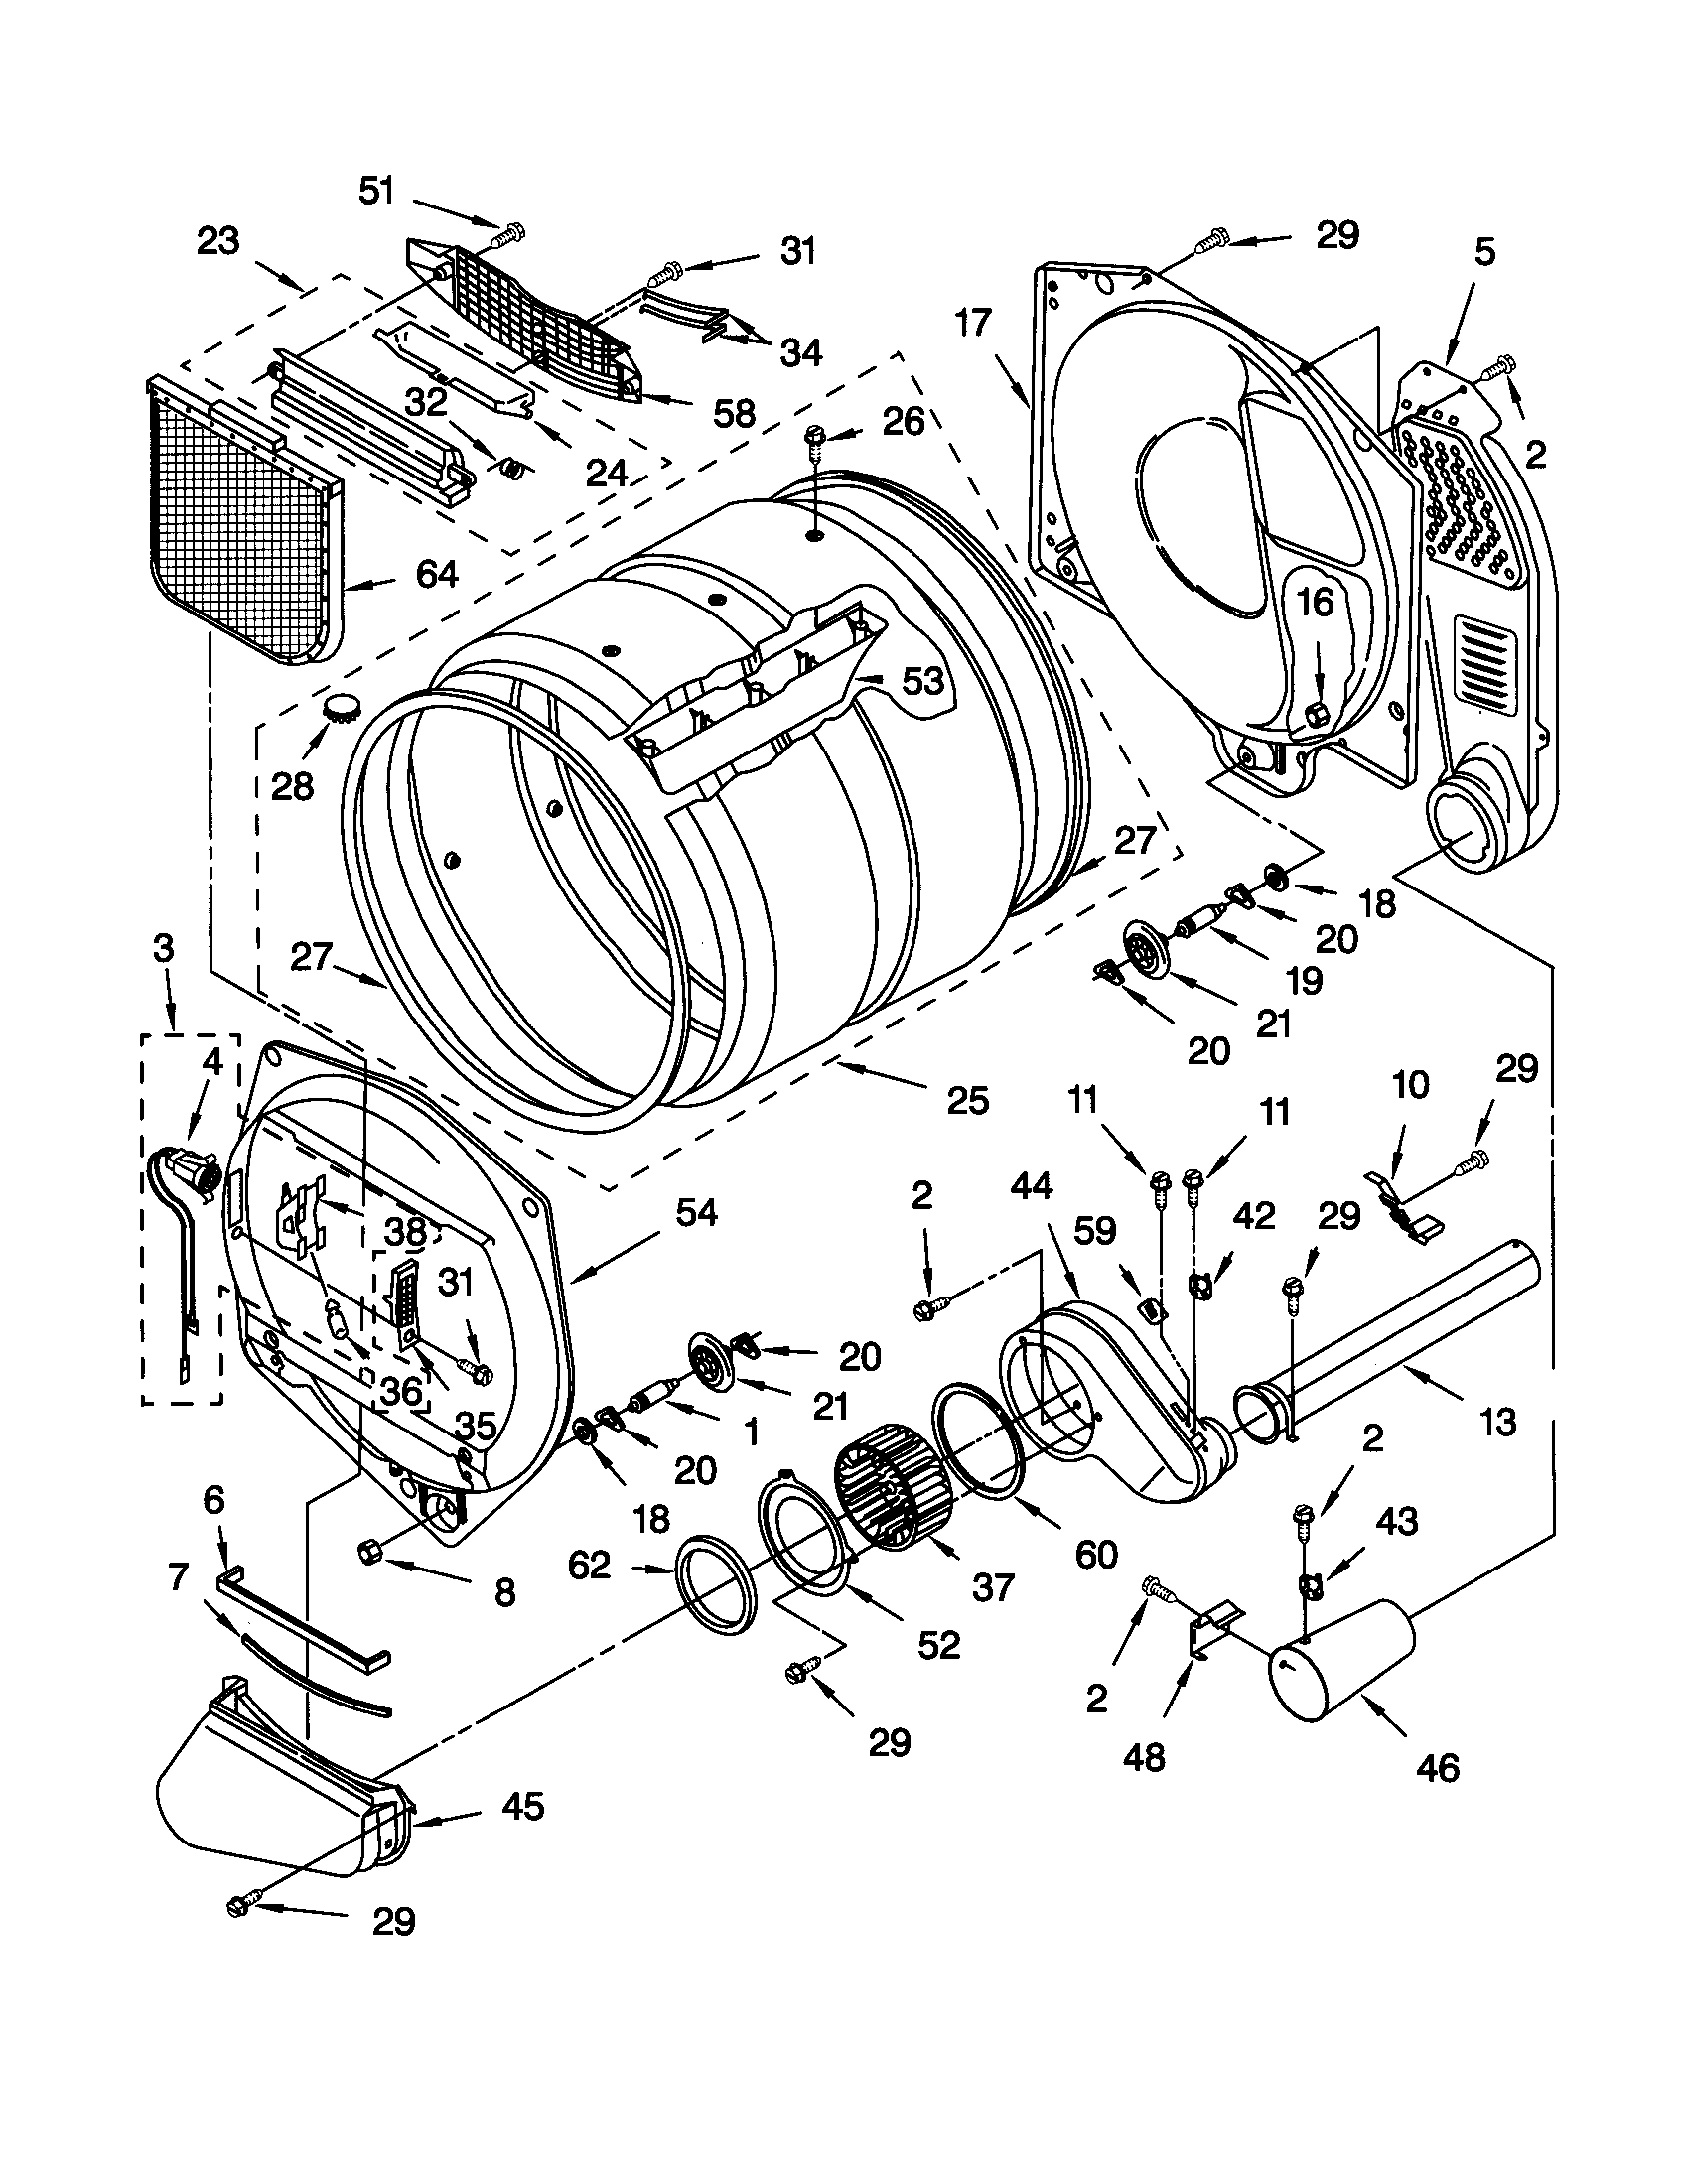 wiring diagram for kenmore washer - Wiring Diagram